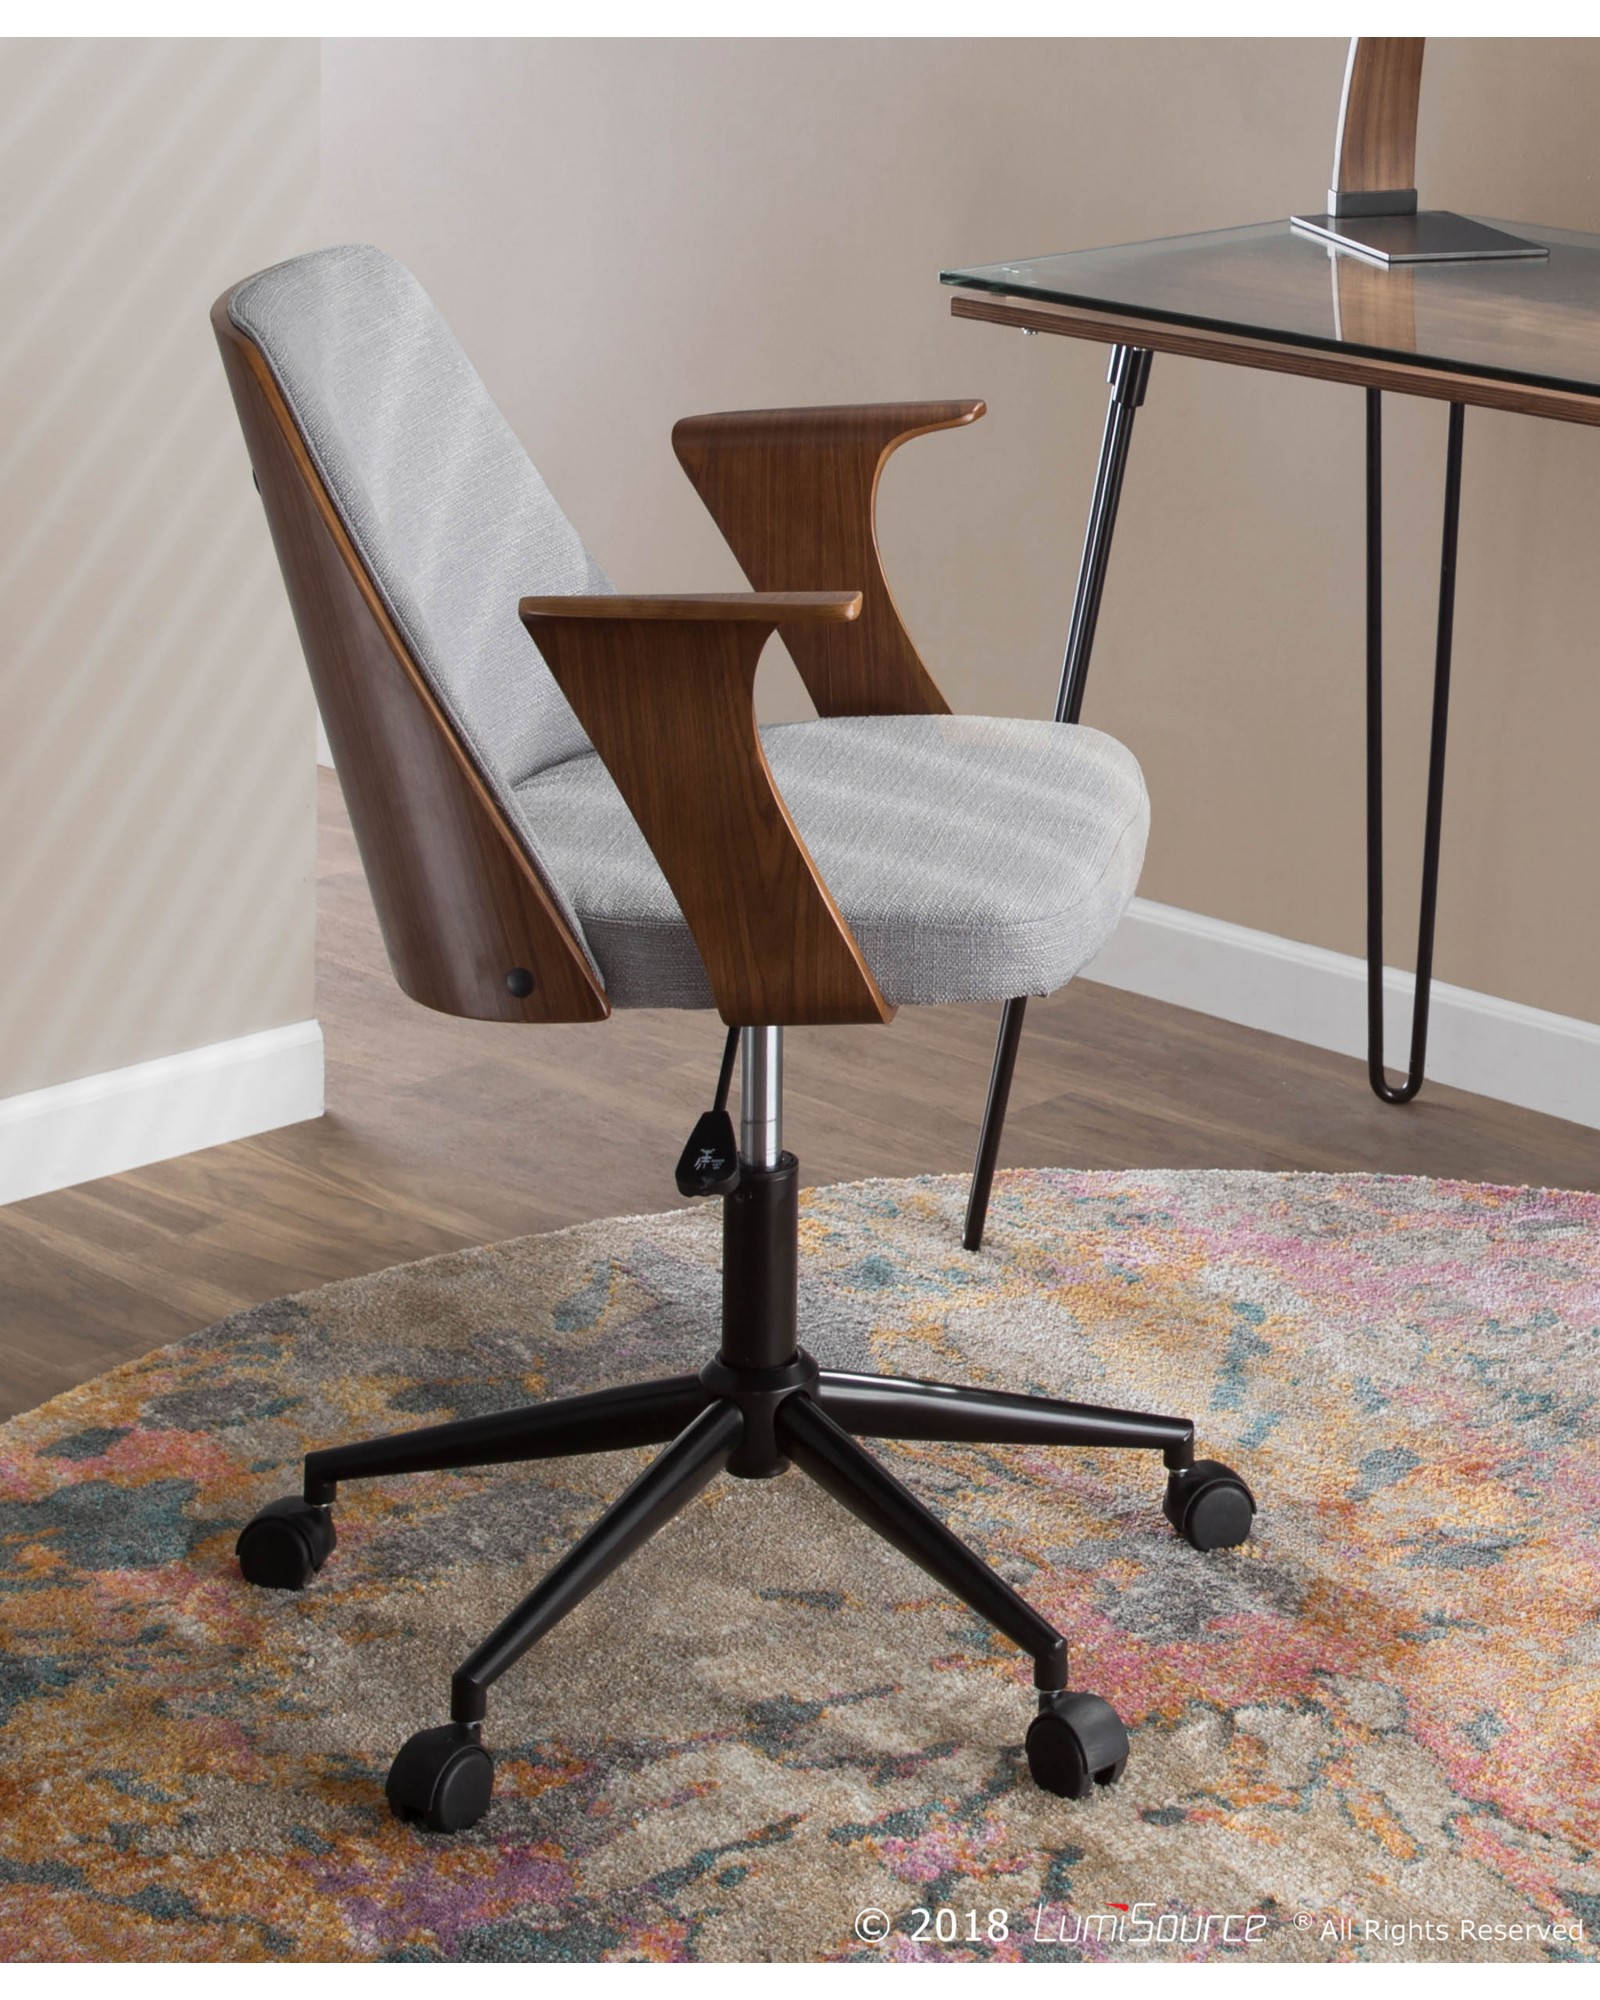 Verdana Mid-Century Modern Office Chair in Walnut Wood and Grey Fabric